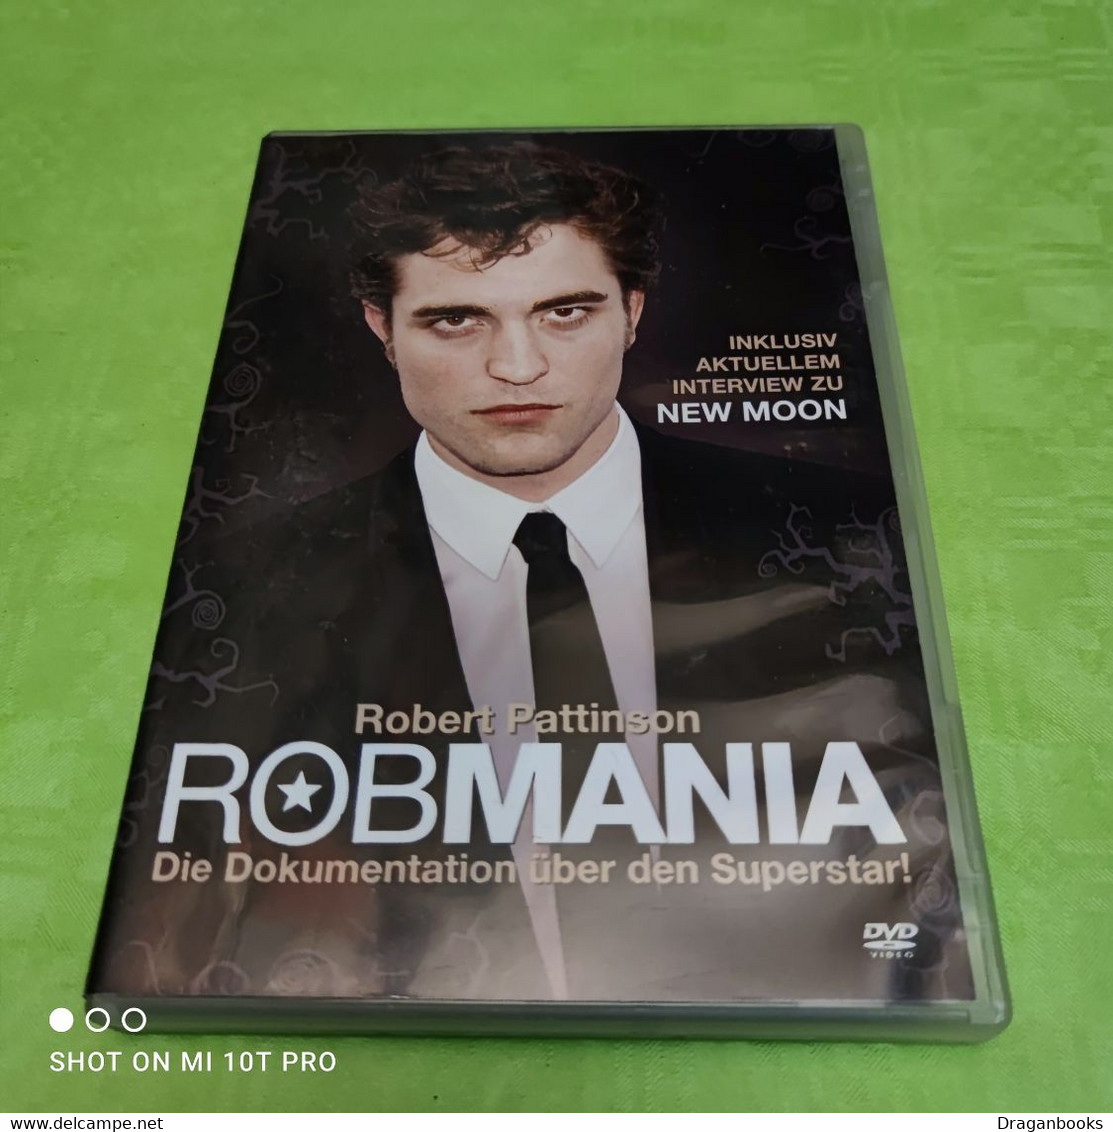 Robmania - Documentary